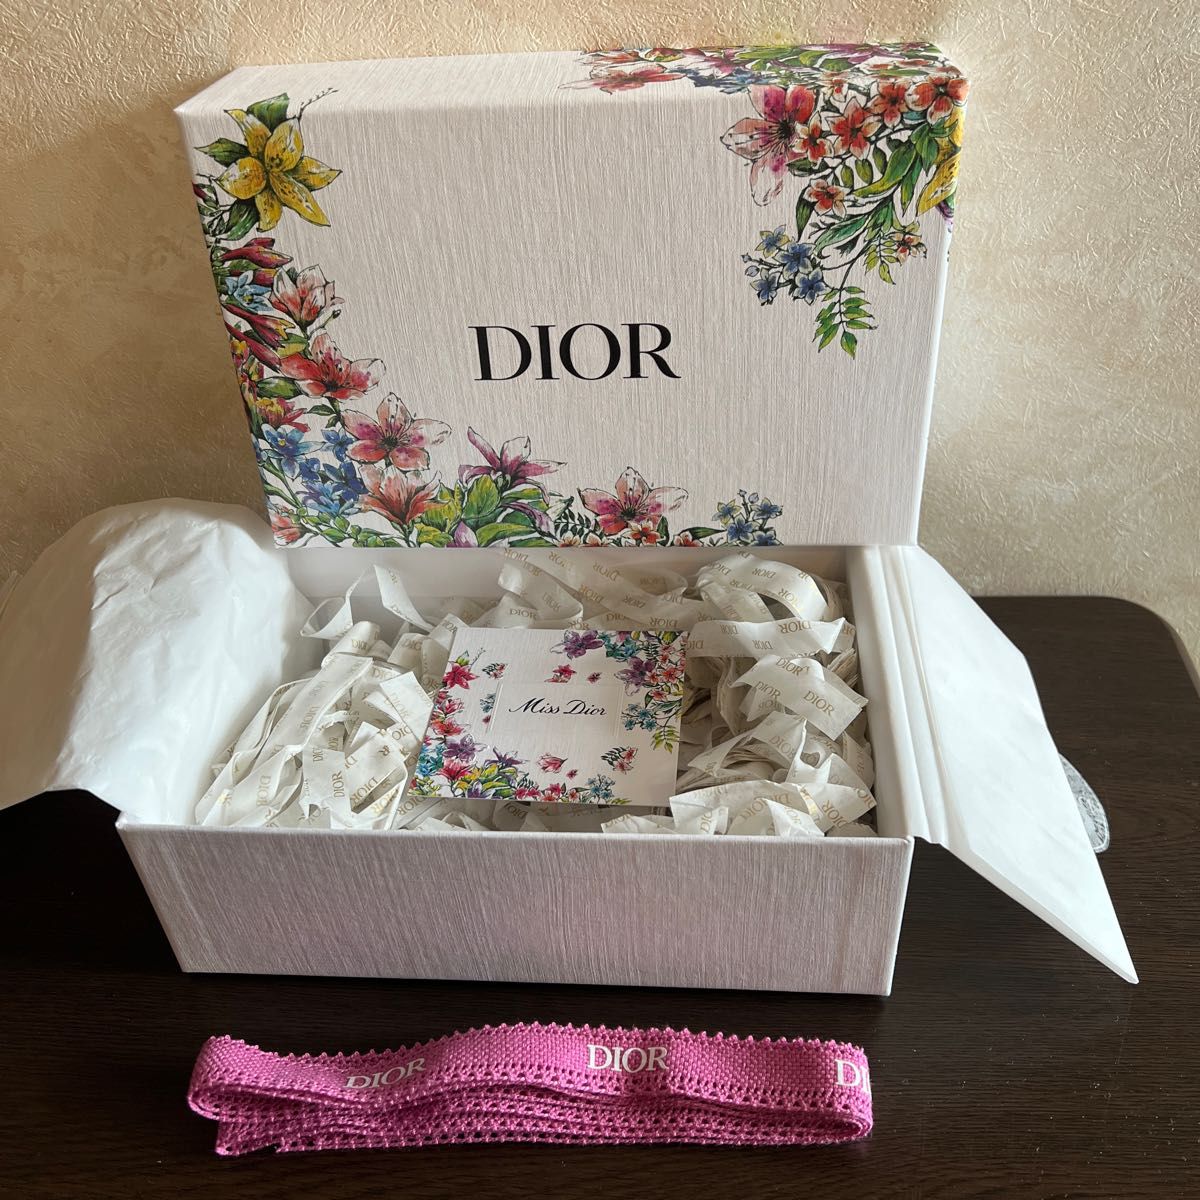 Dior ディオール バレンタインデー 限定 箱 ボックス